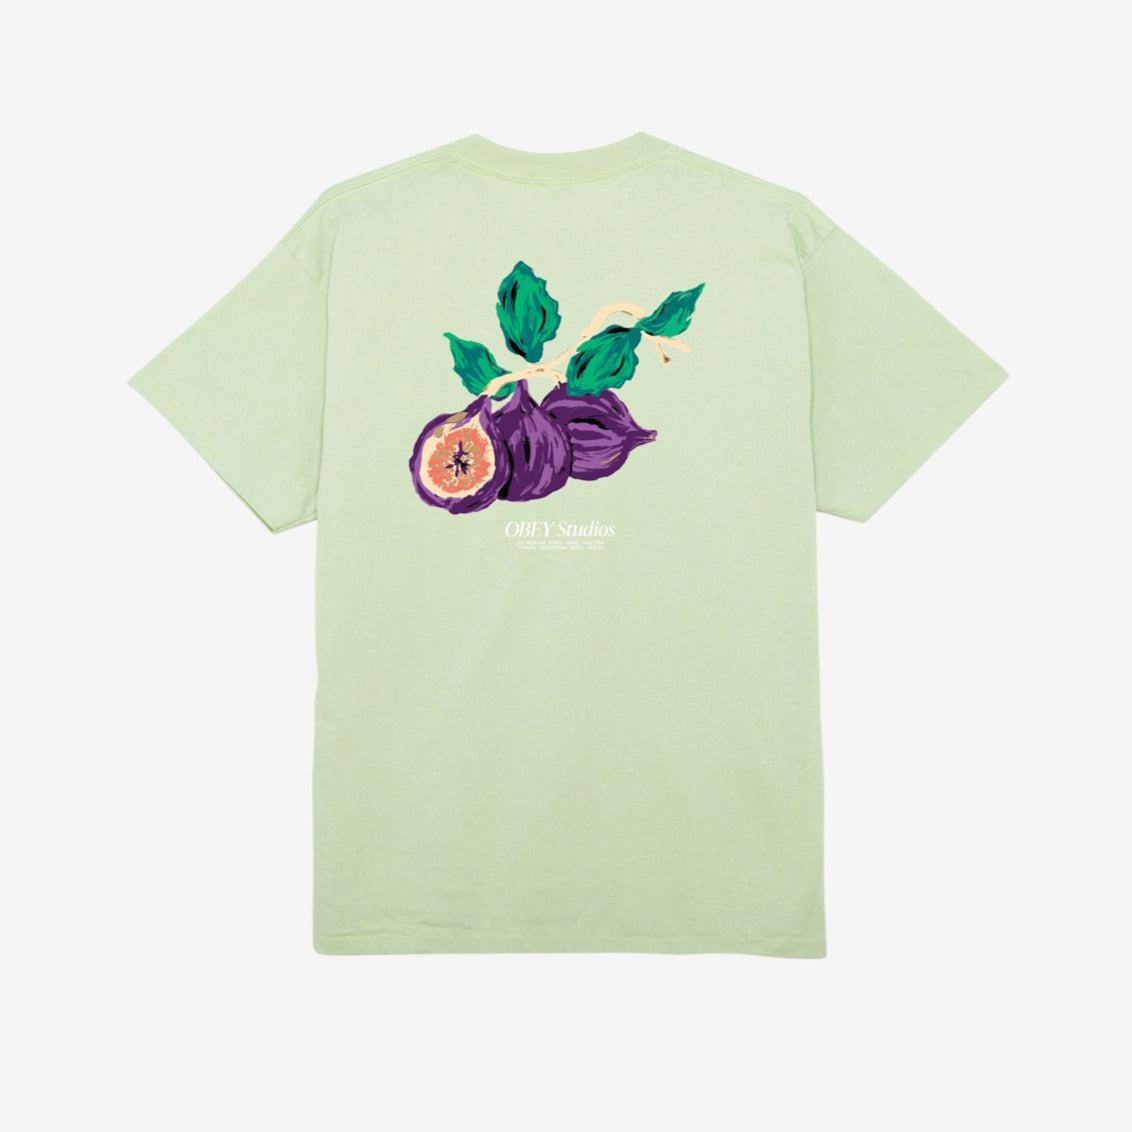 Obey Studios T-Shirt - Cucumber